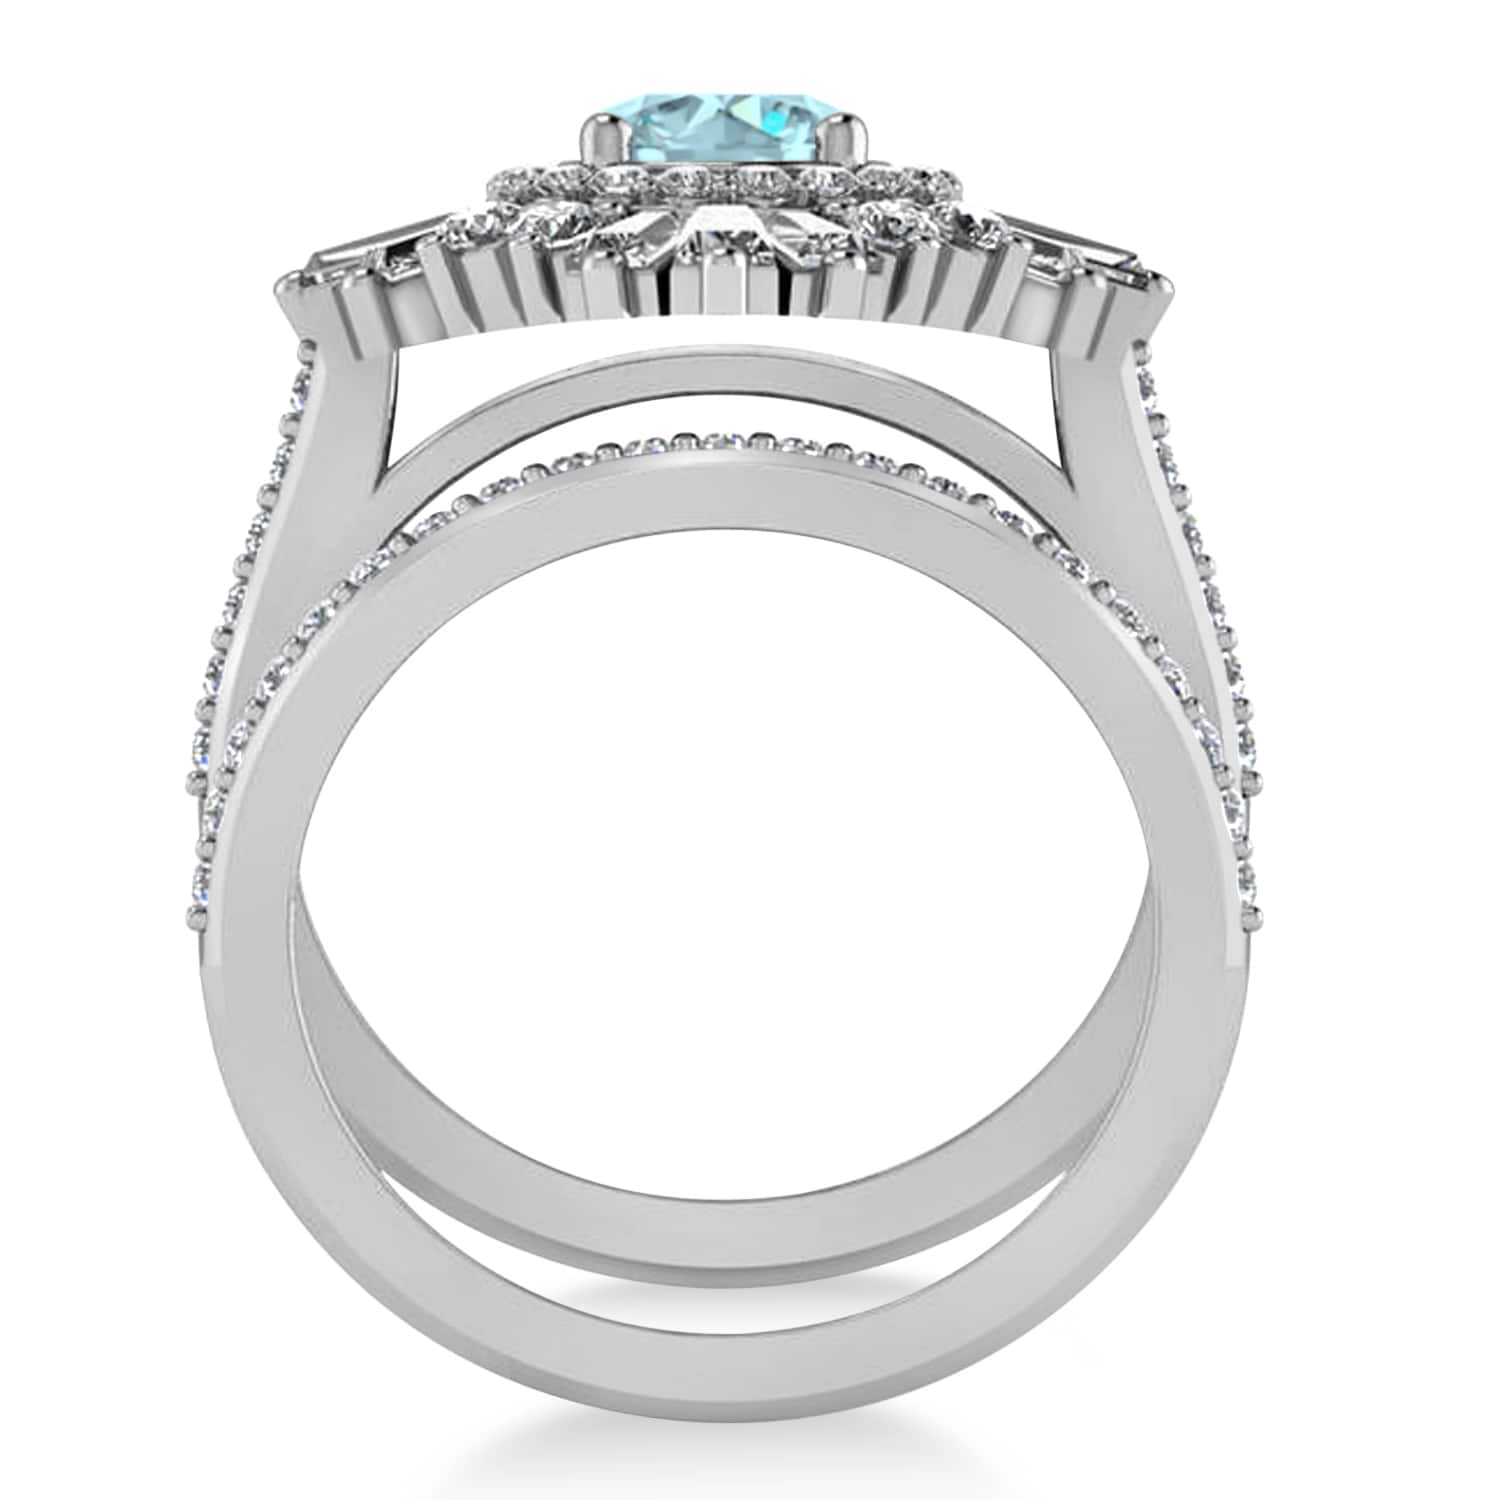 Aquamarine & Diamond Ballerina Engagement Ring 14k White Gold (2.74 ctw)